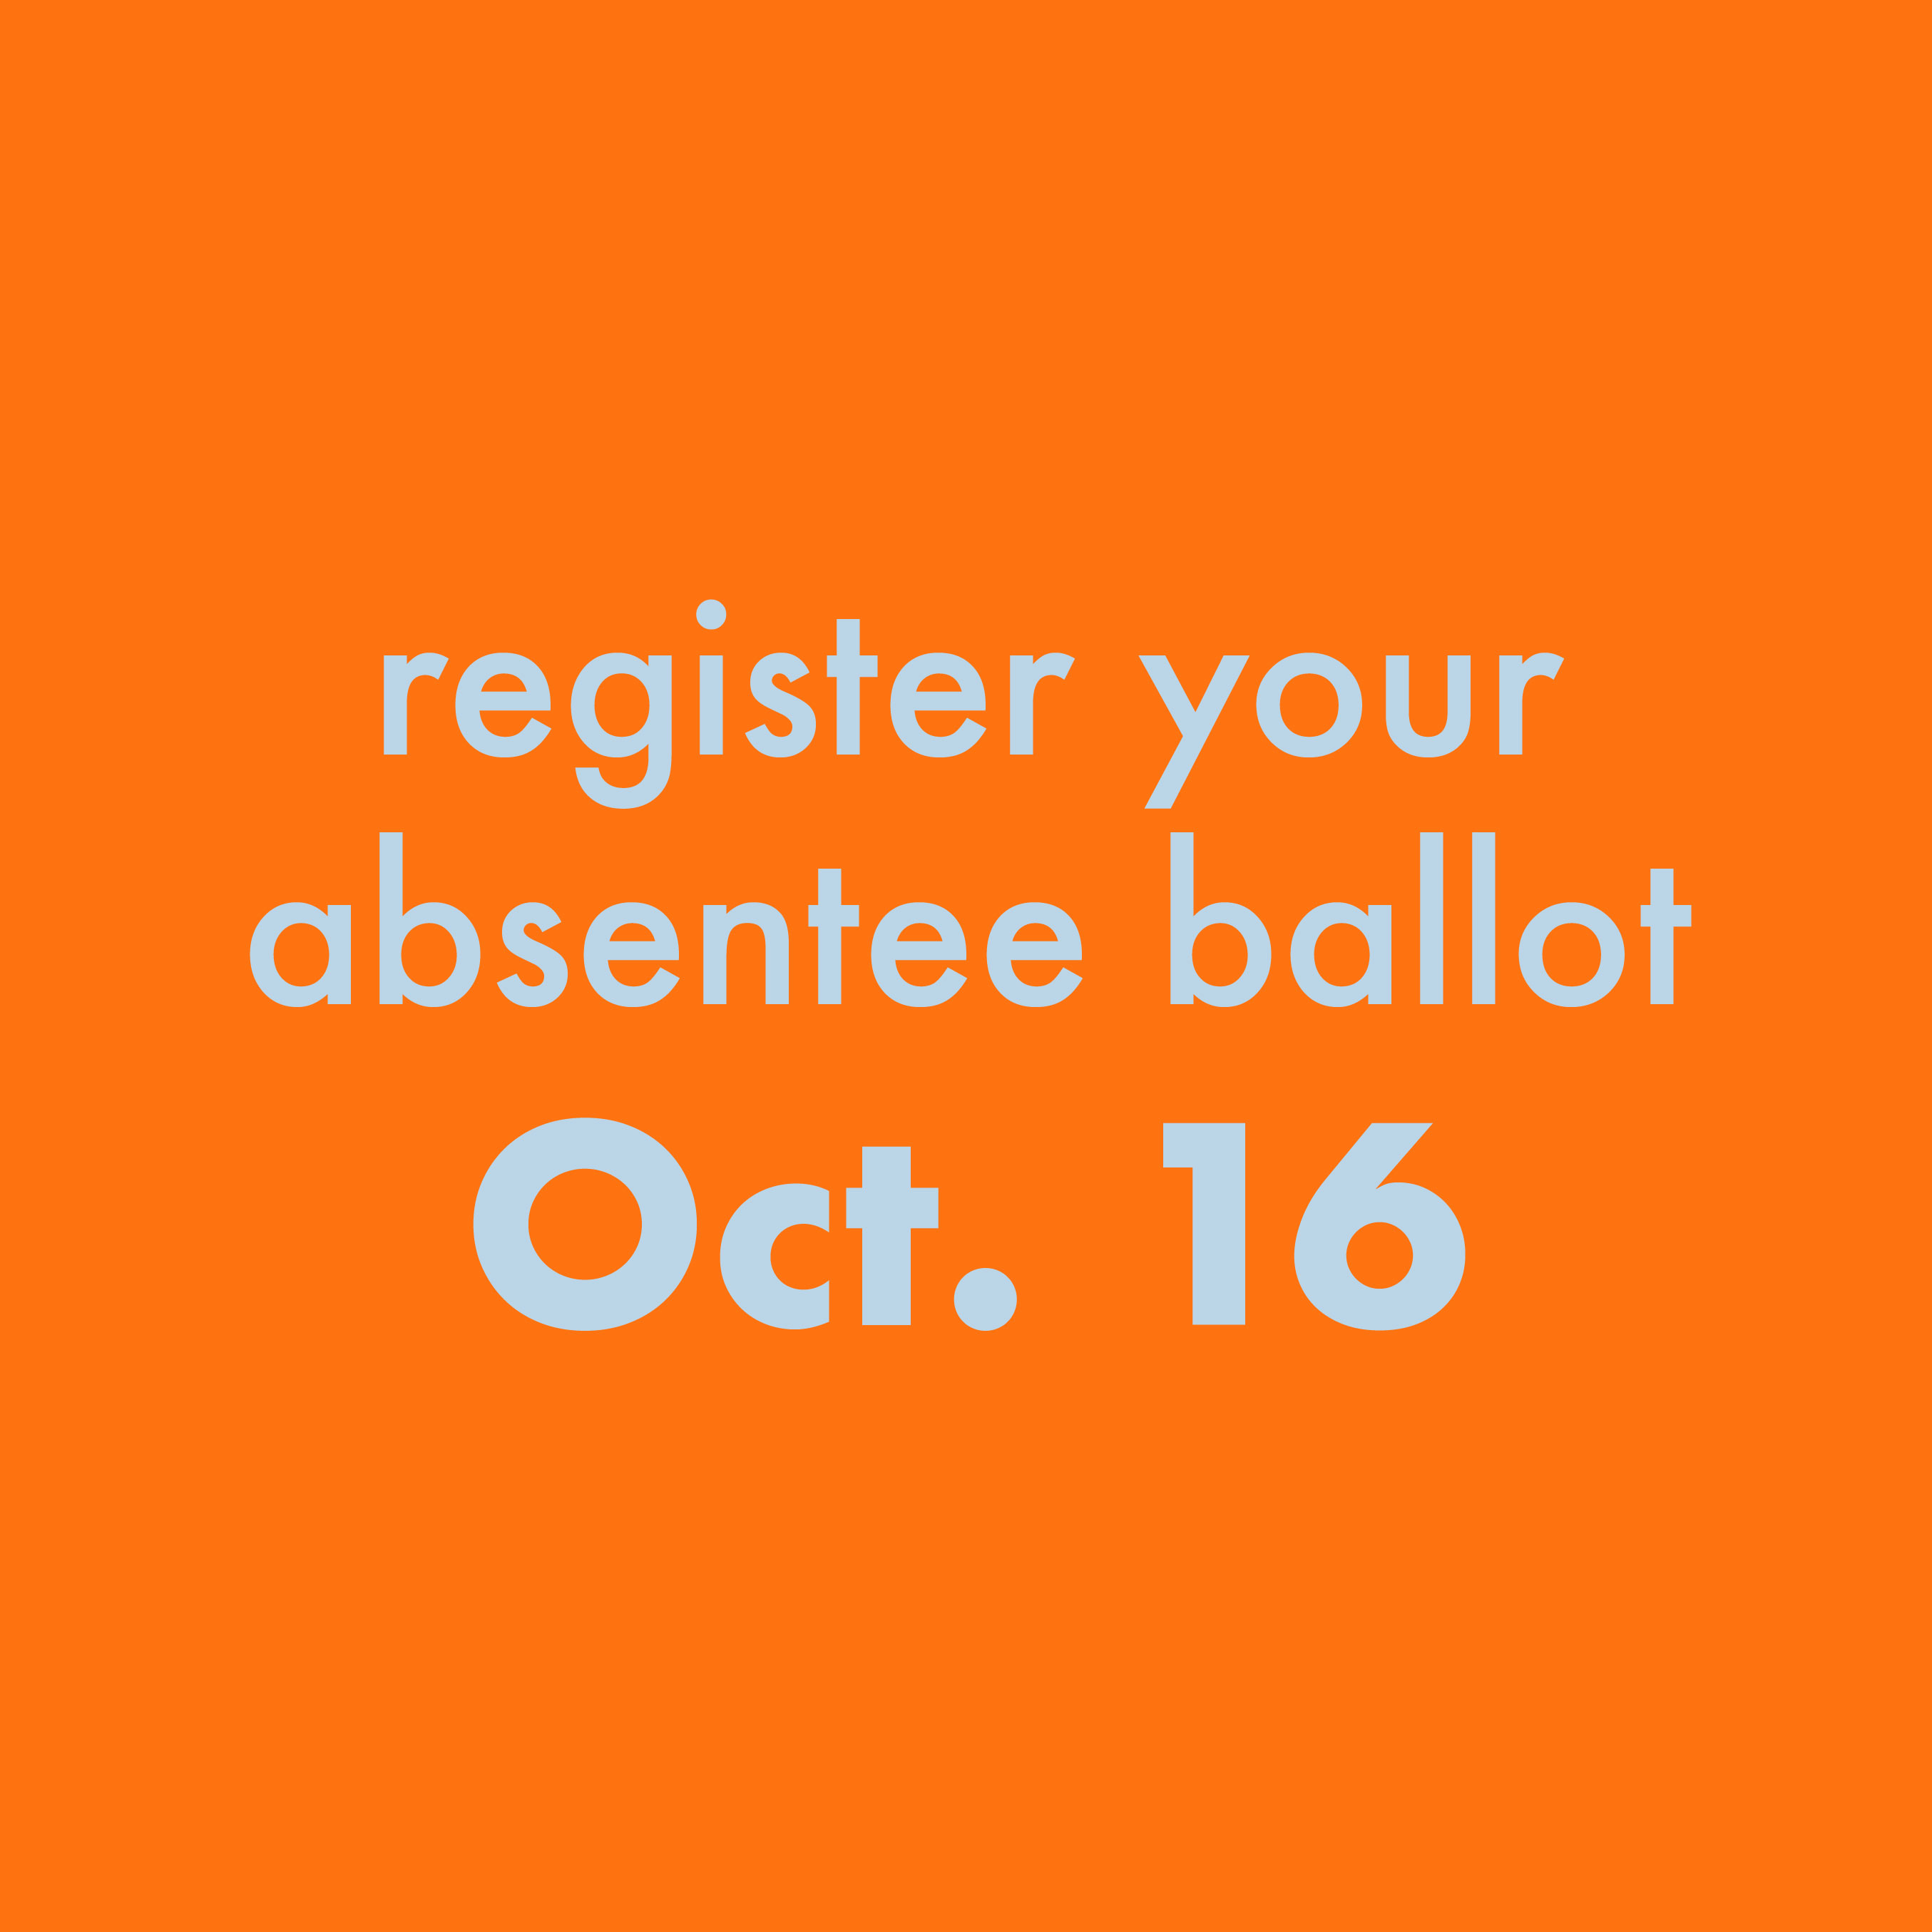 Register your absentee ballot by Oct. 16